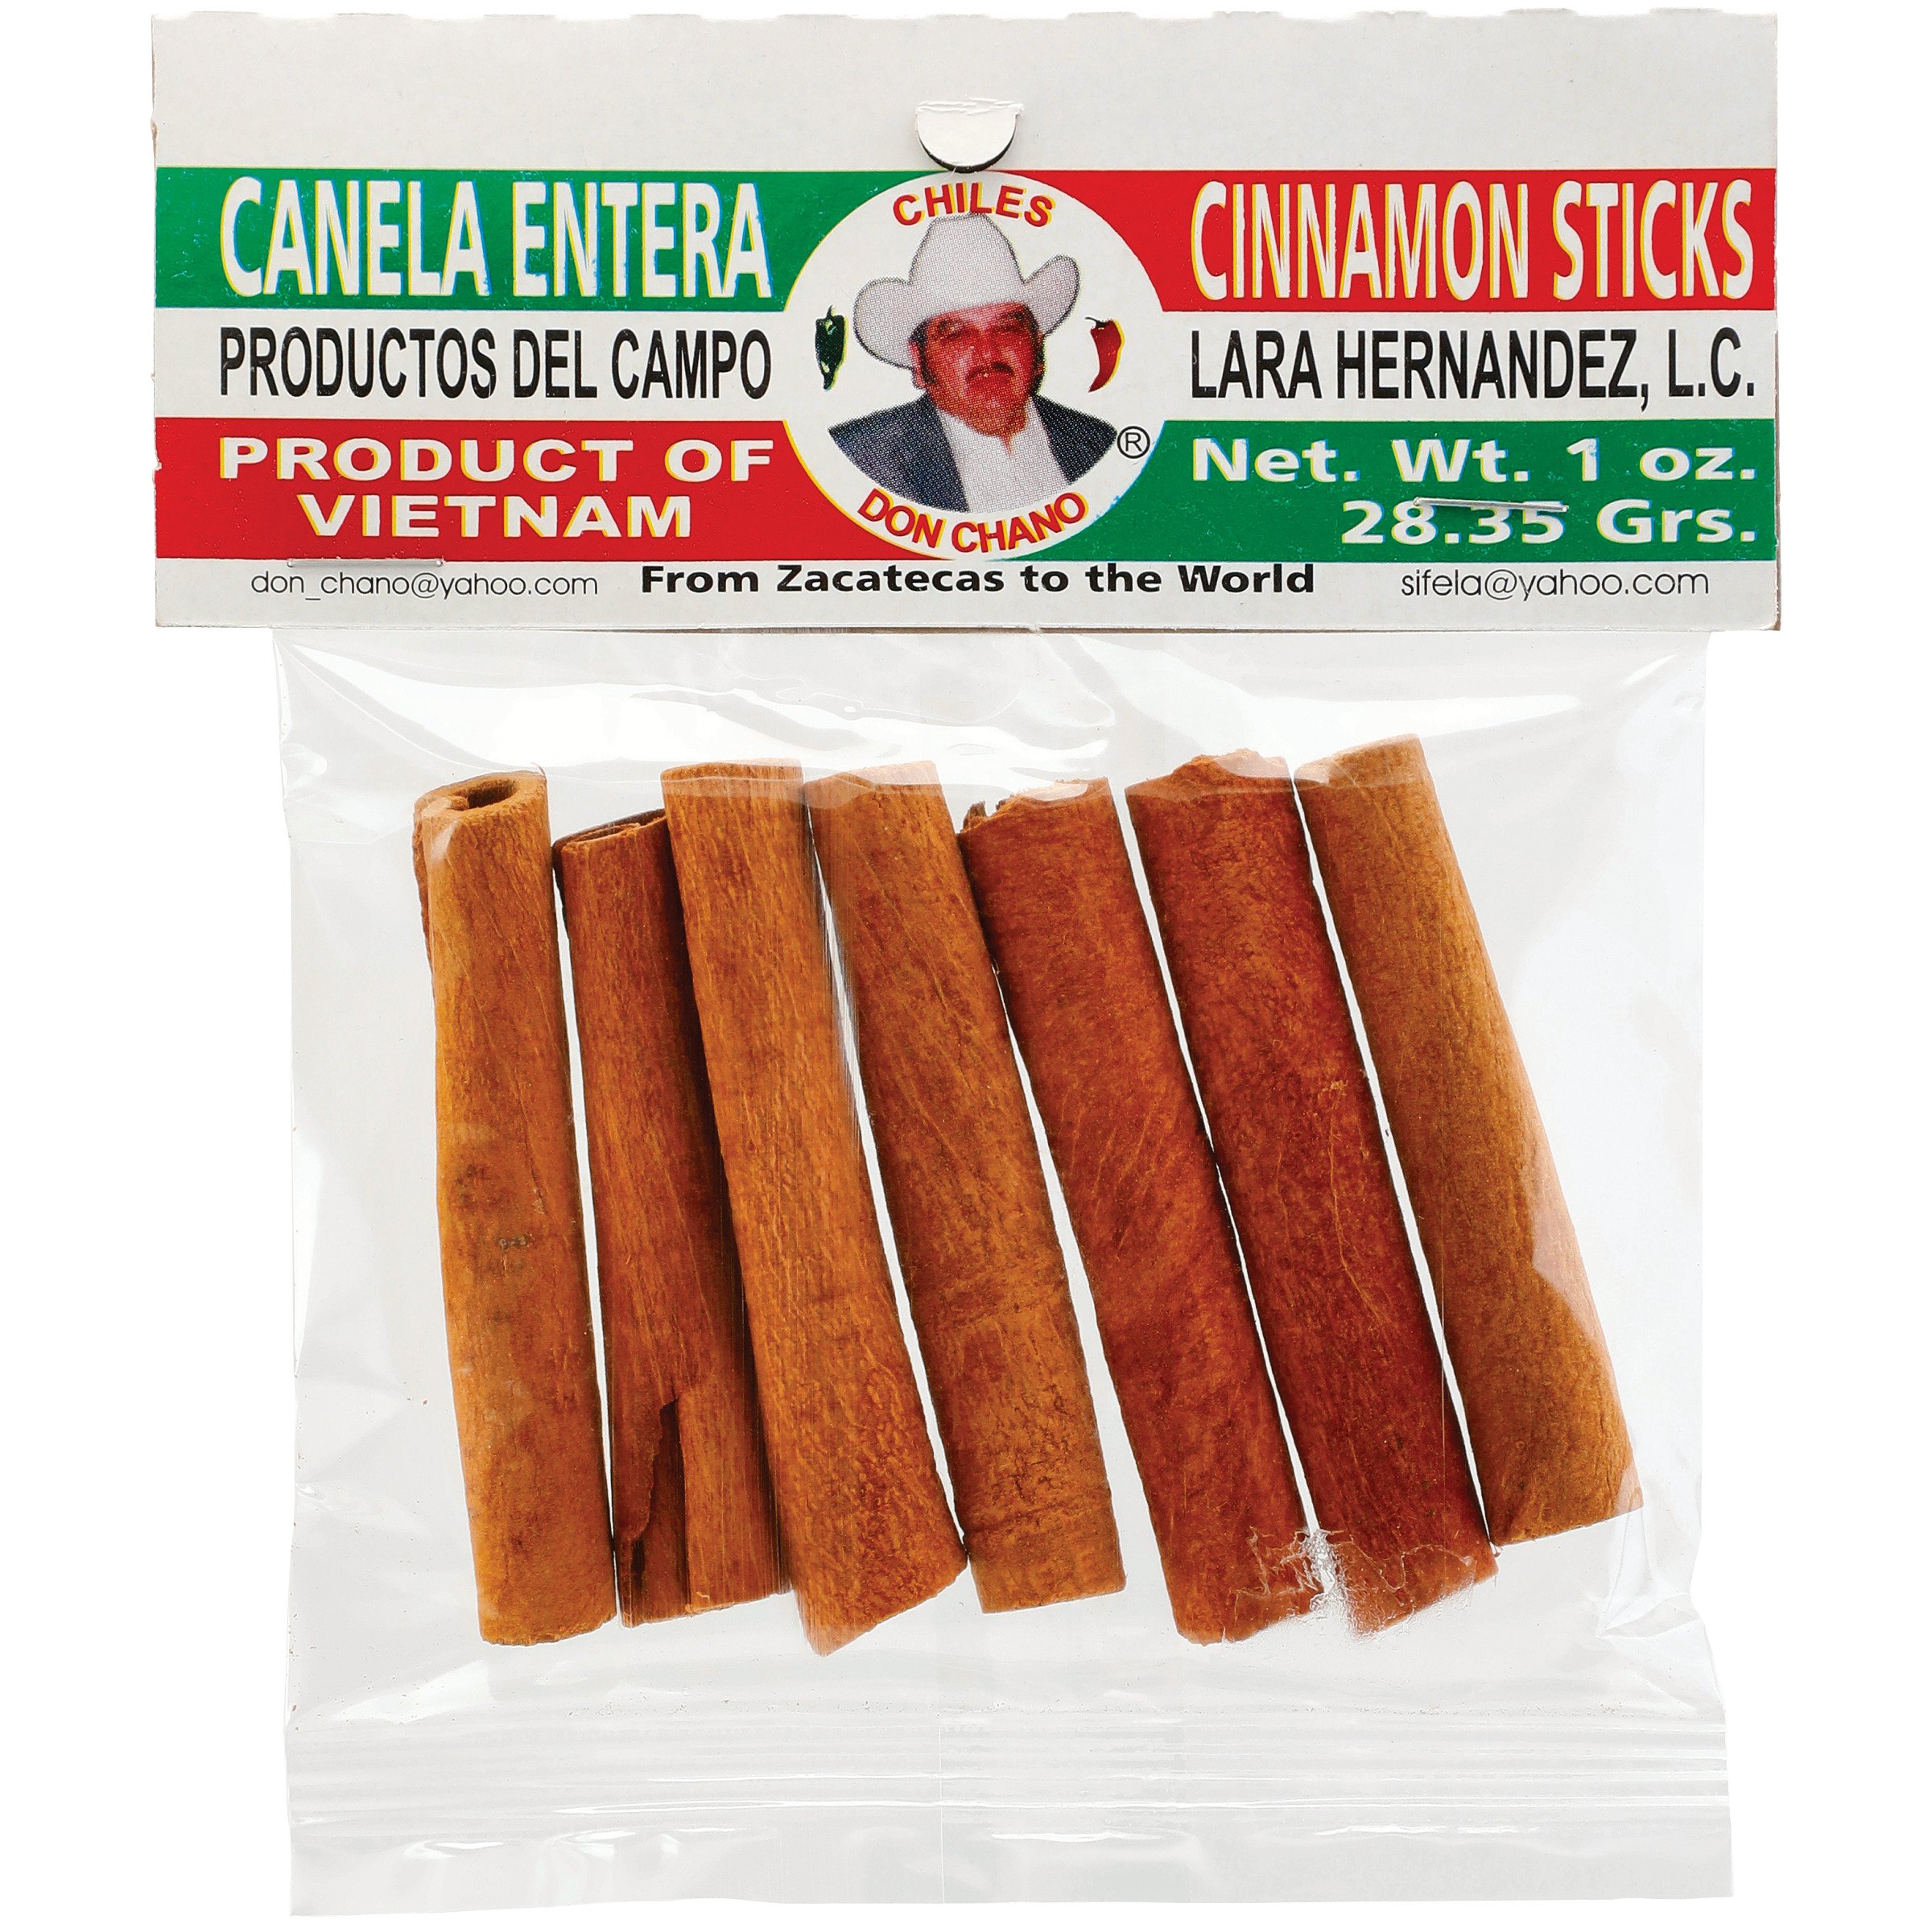 Chiles Don Chano Canela Entera Whole Cinnamon Sticks